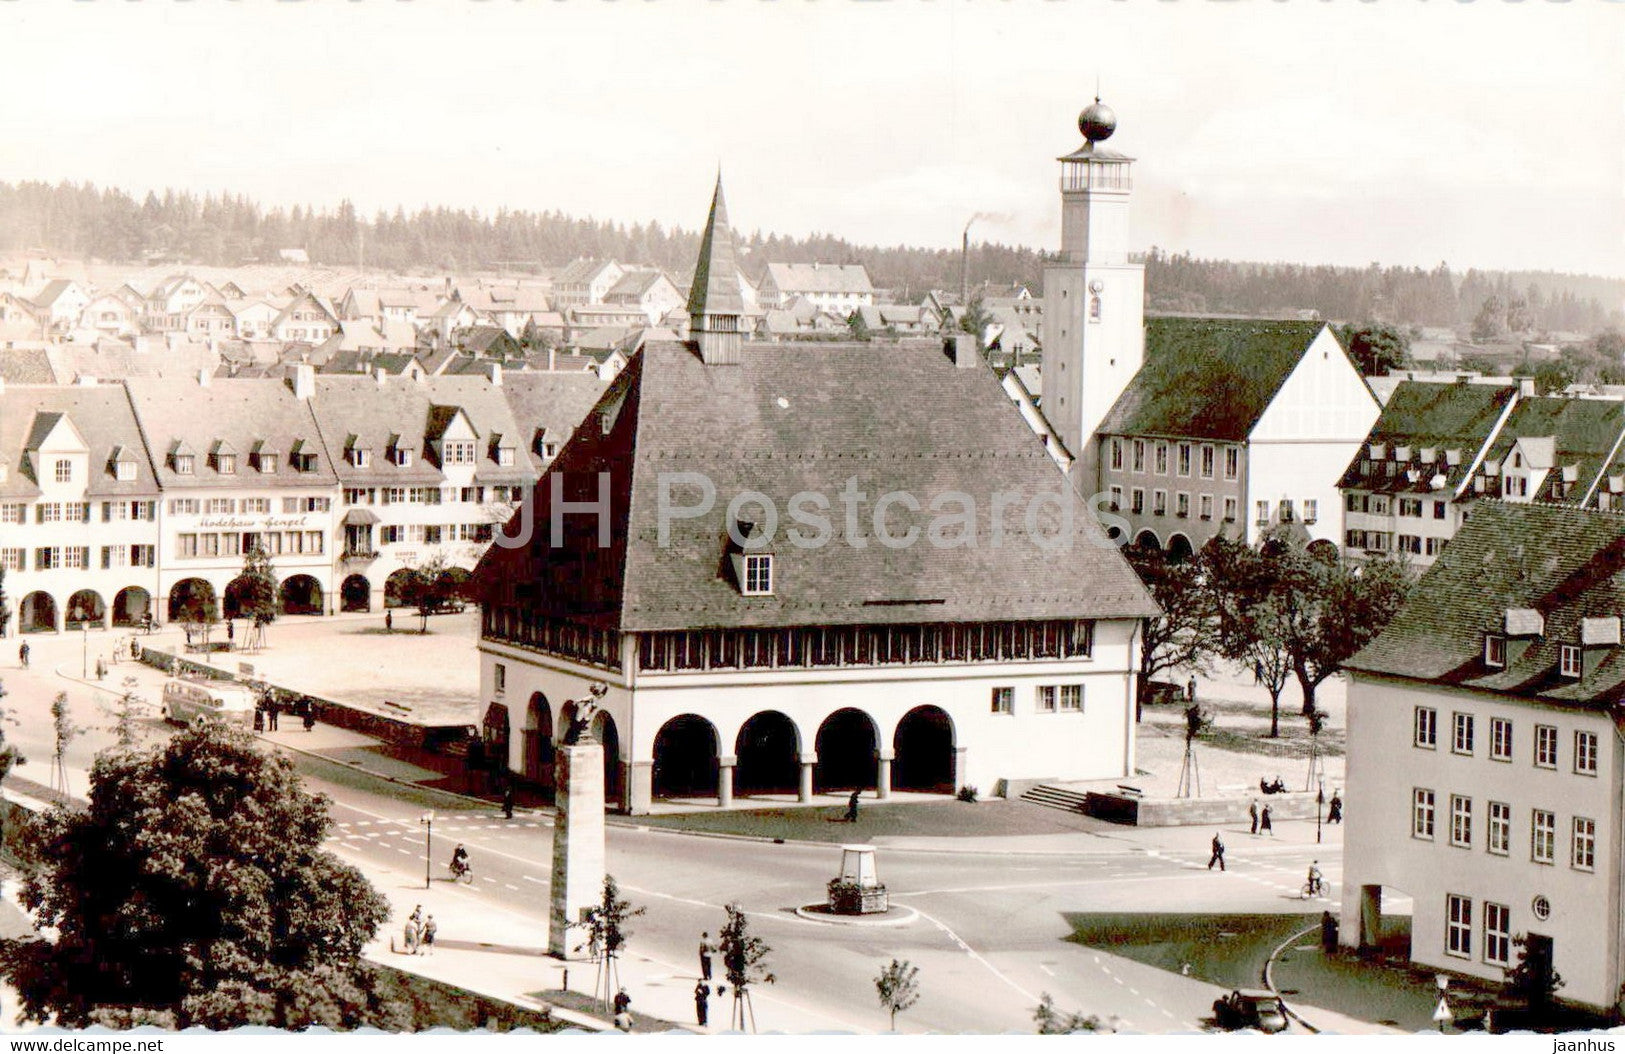 Freudenstadt im Schwarzwald - Marktplatz - old postcard - Germany - unused - JH Postcards